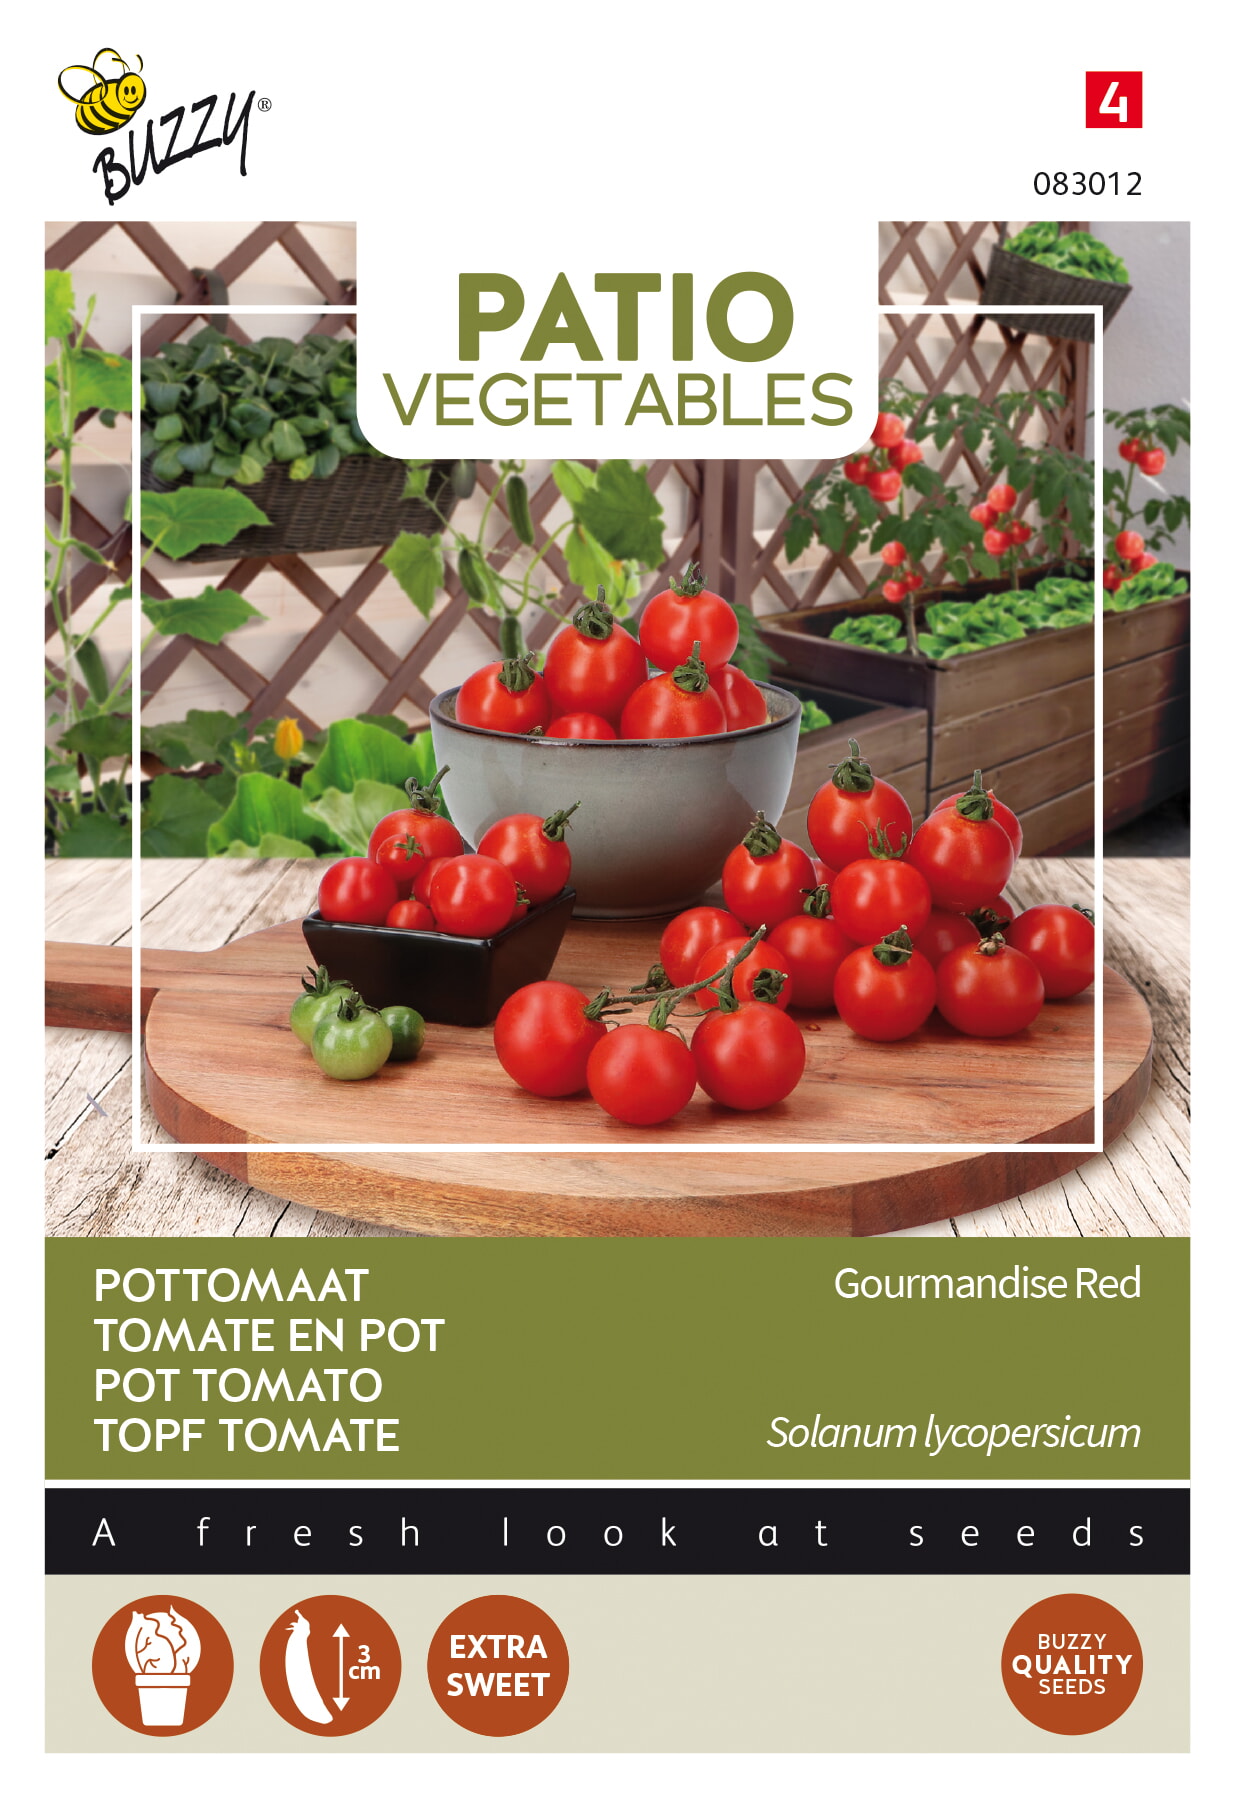 Buzzy Patio Veggies, Tomaat Gourmandise Red - 